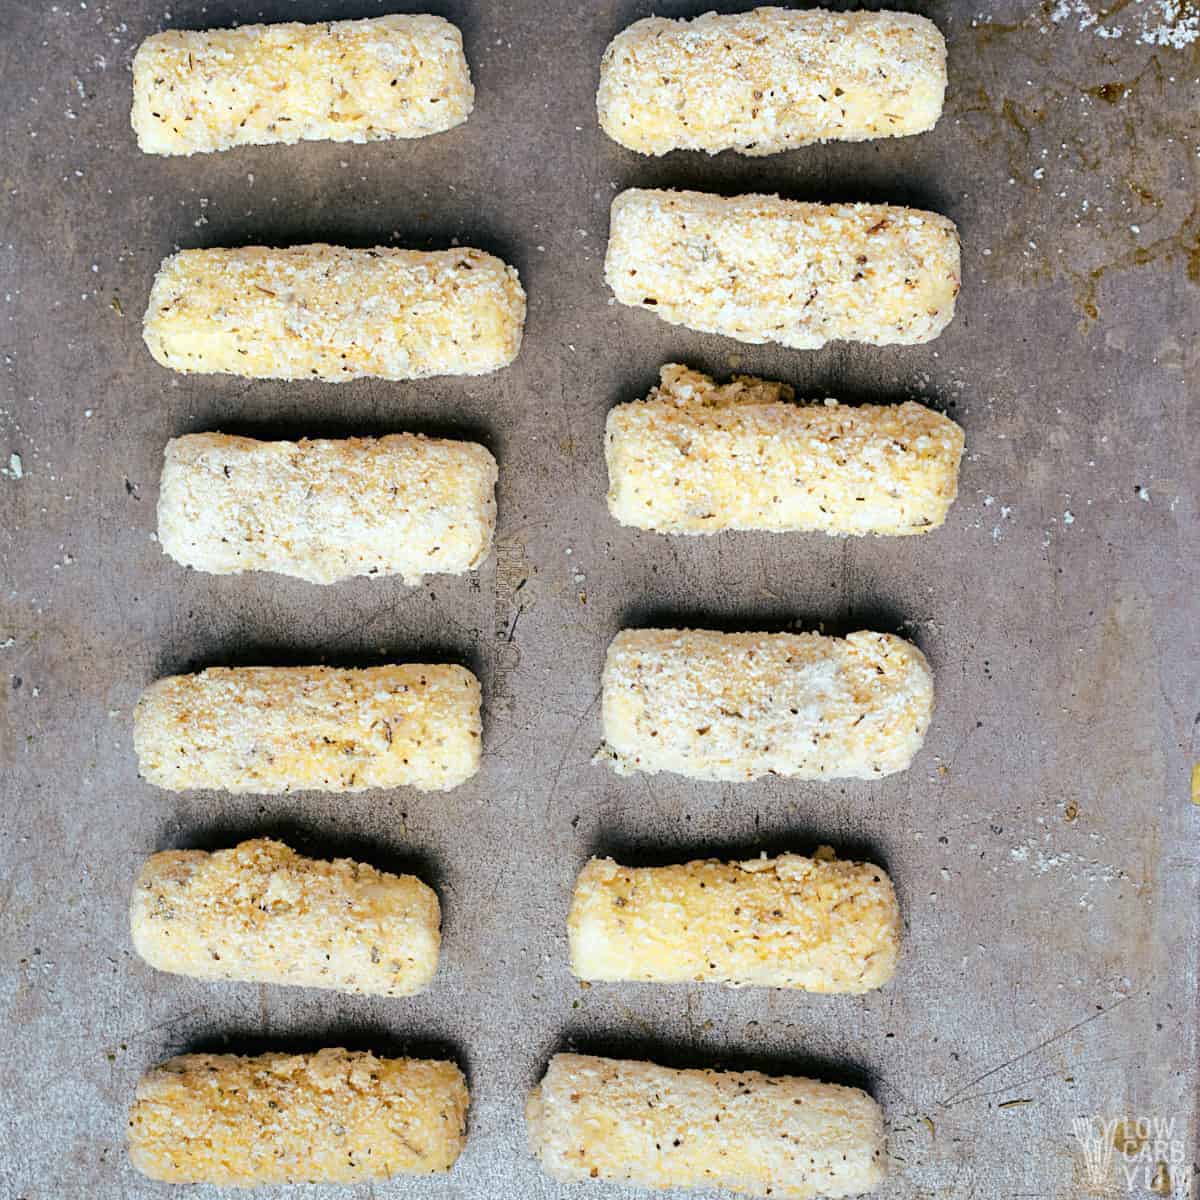 frozen prepared cheese sticks on baking sheet.